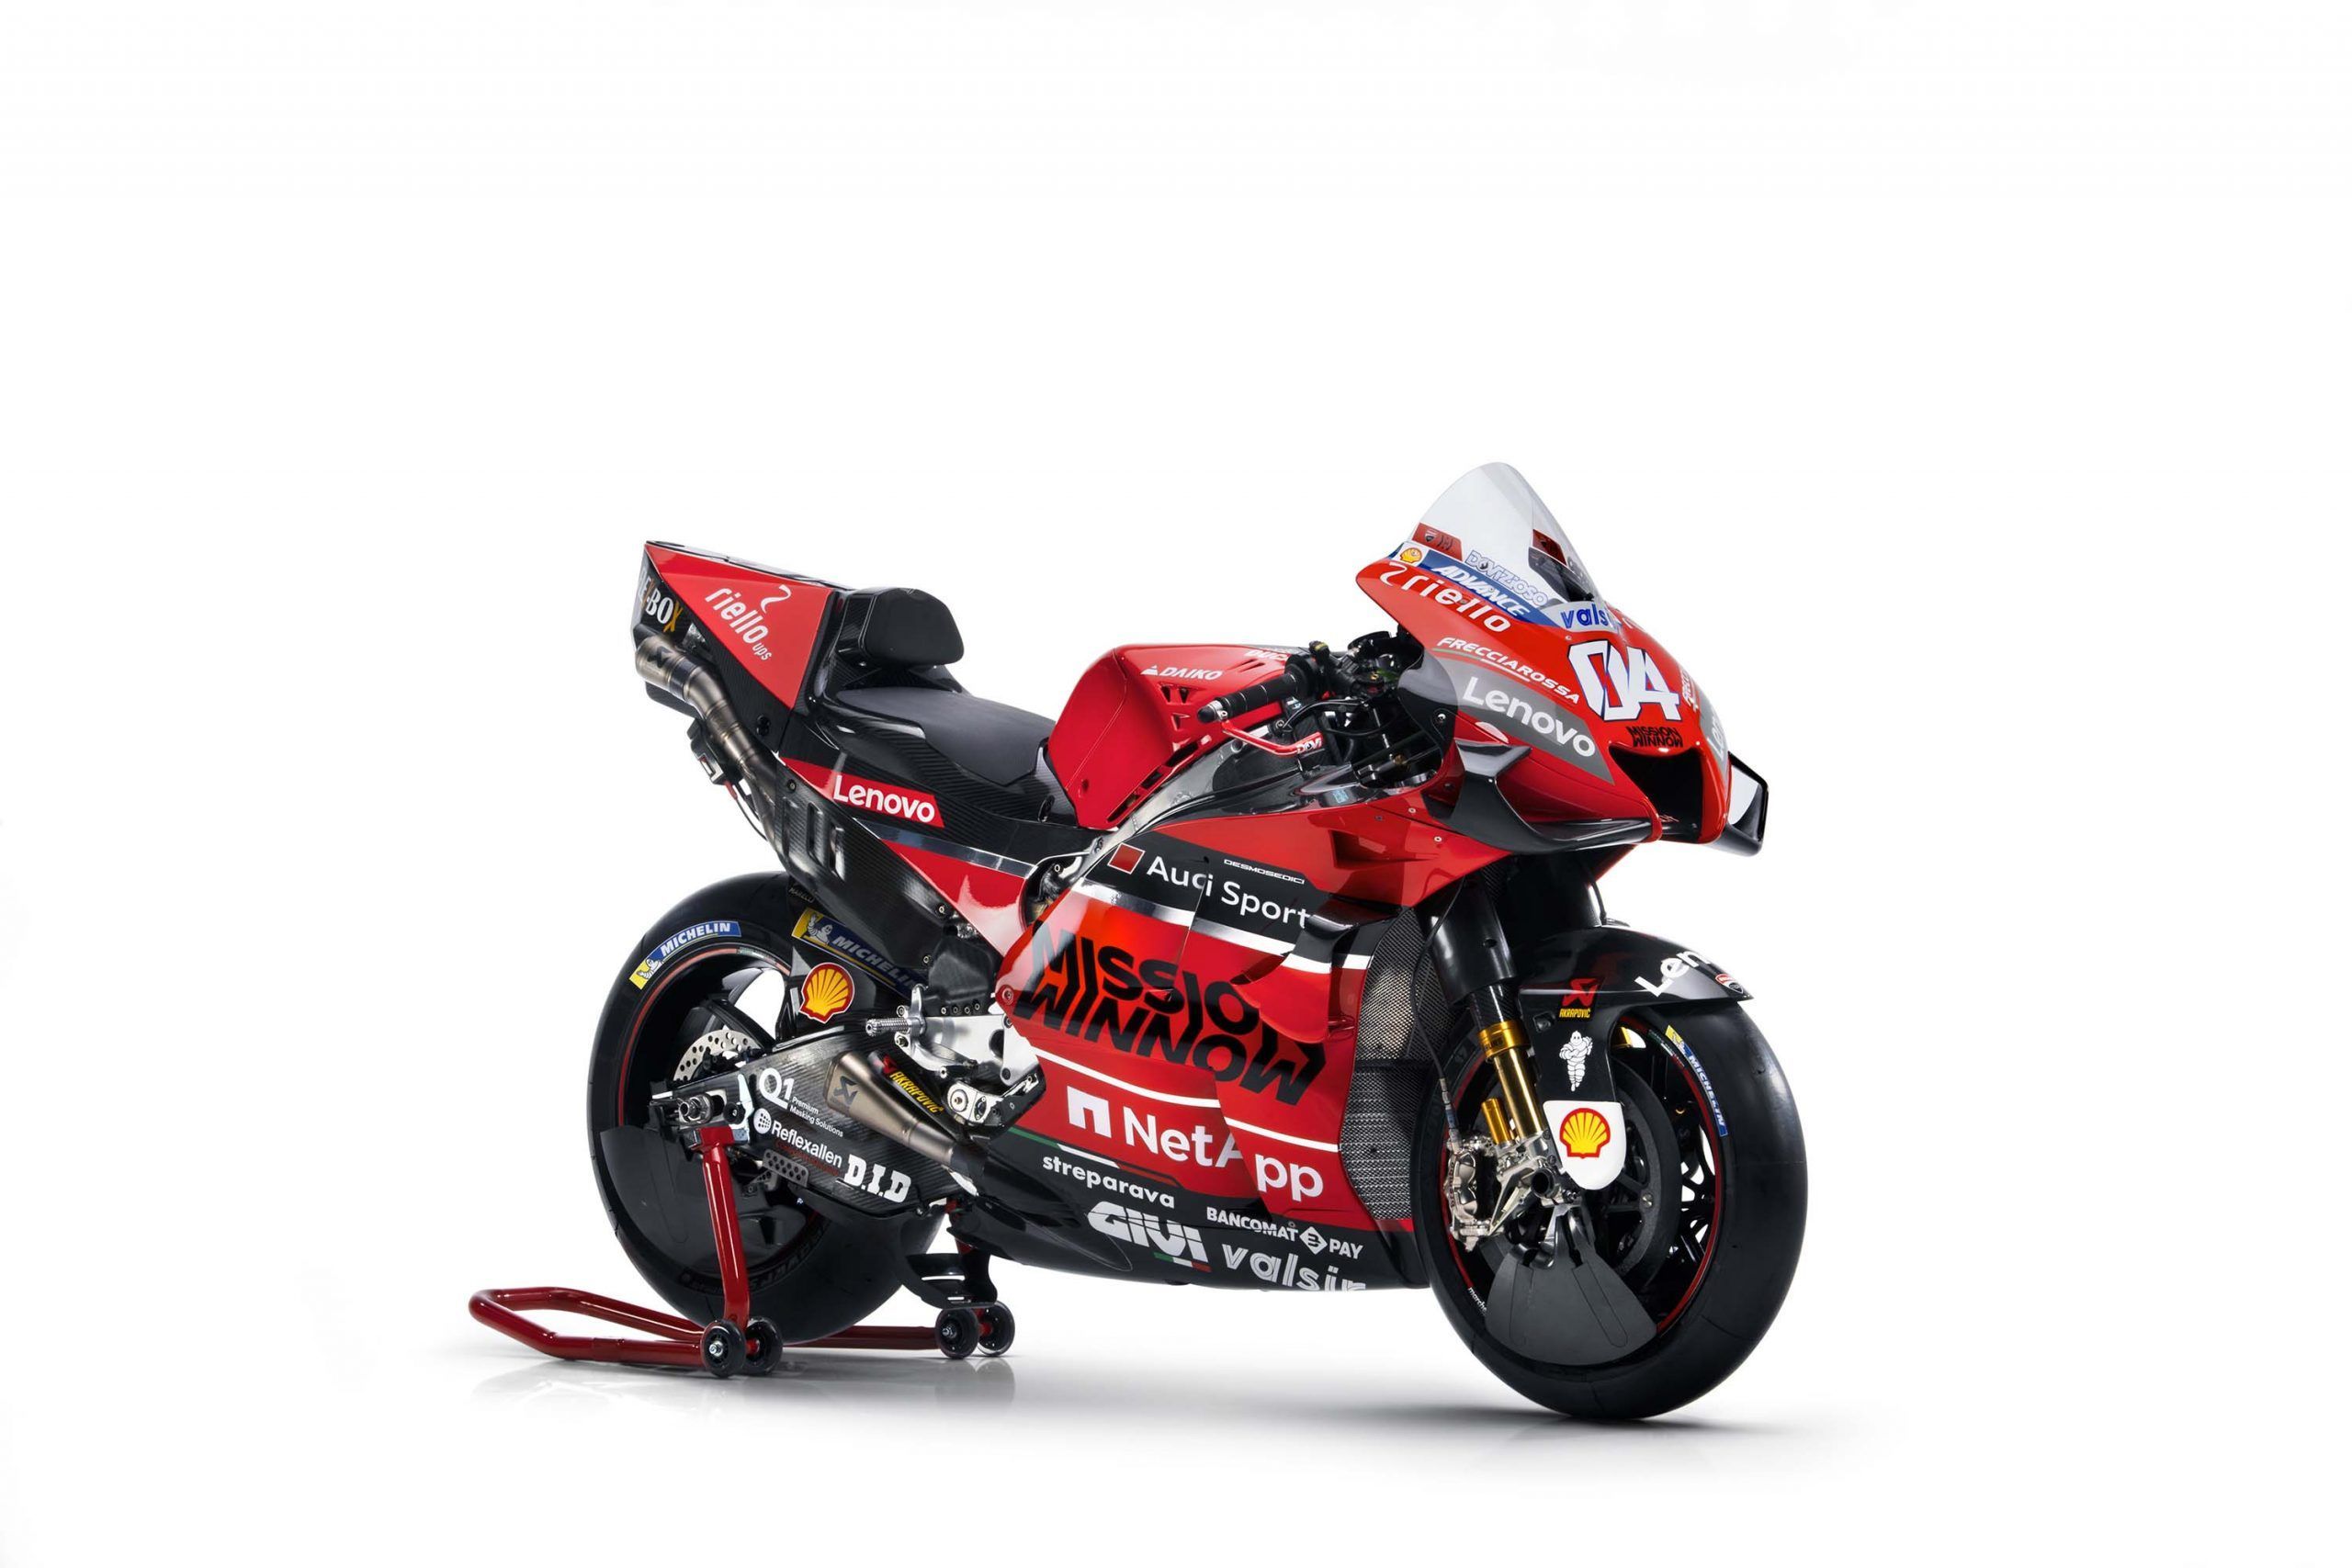 Ducati Desmosedici GP20 MotoGP Motorcycle. Ducati, Ducati motogp, Motogp